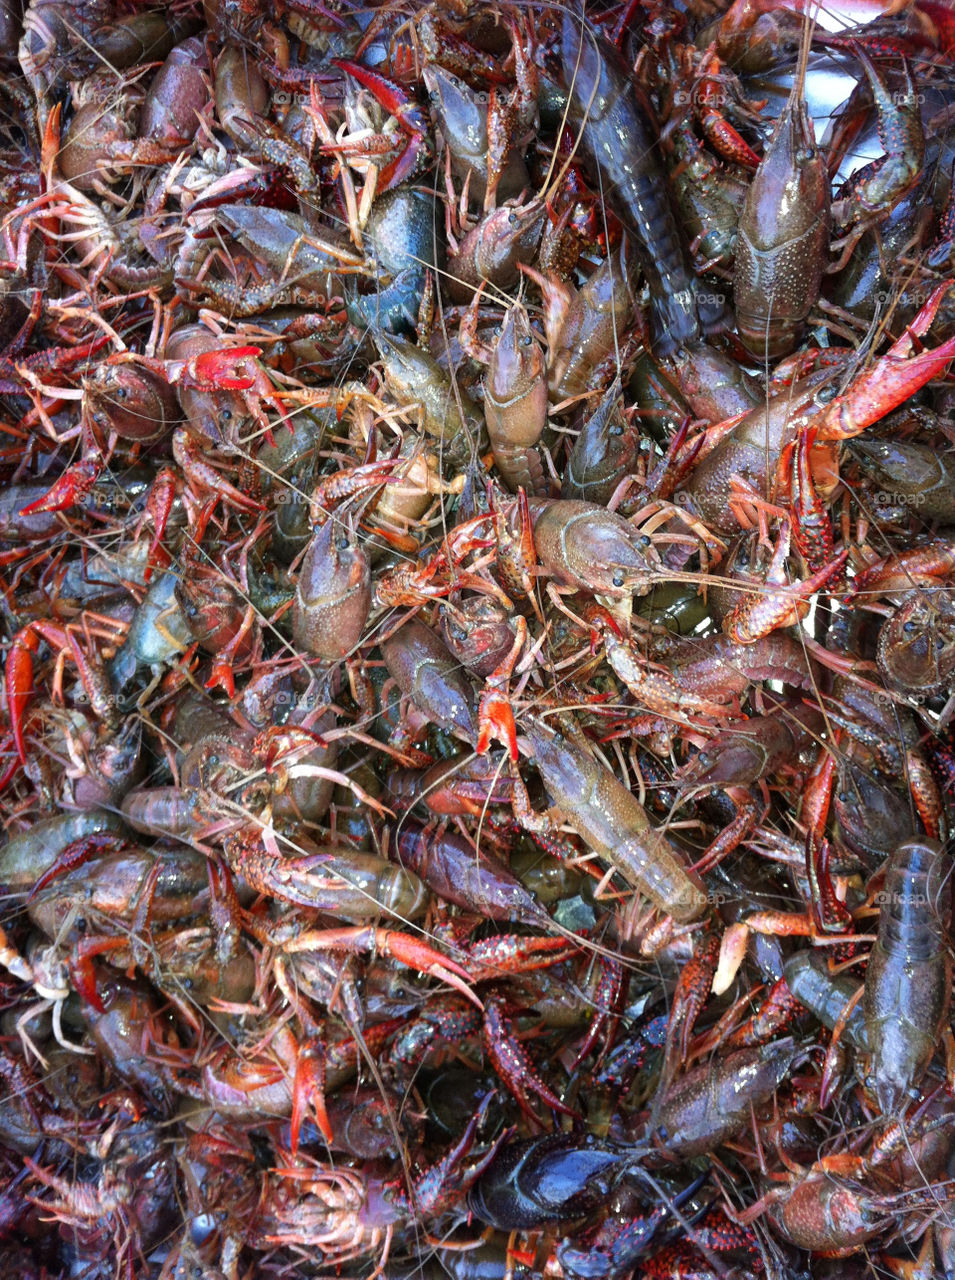 Crawfish boil in Louisiana